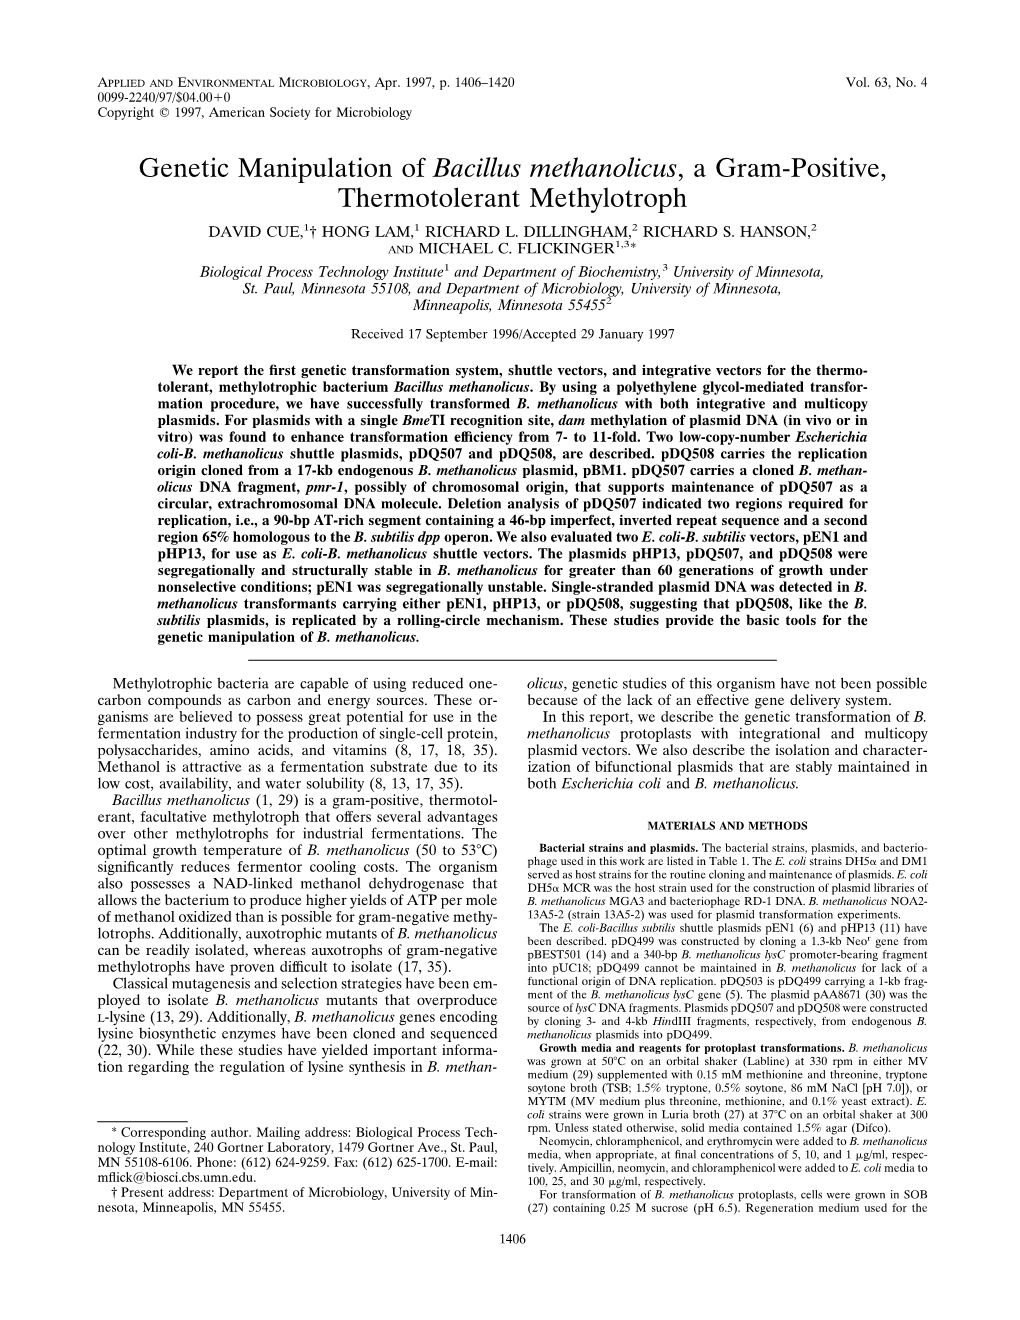 Genetic Manipulation of Bacillus Methanolicus, a Gram-Positive, Thermotolerant Methylotroph DAVID CUE,1† HONG LAM,1 RICHARD L